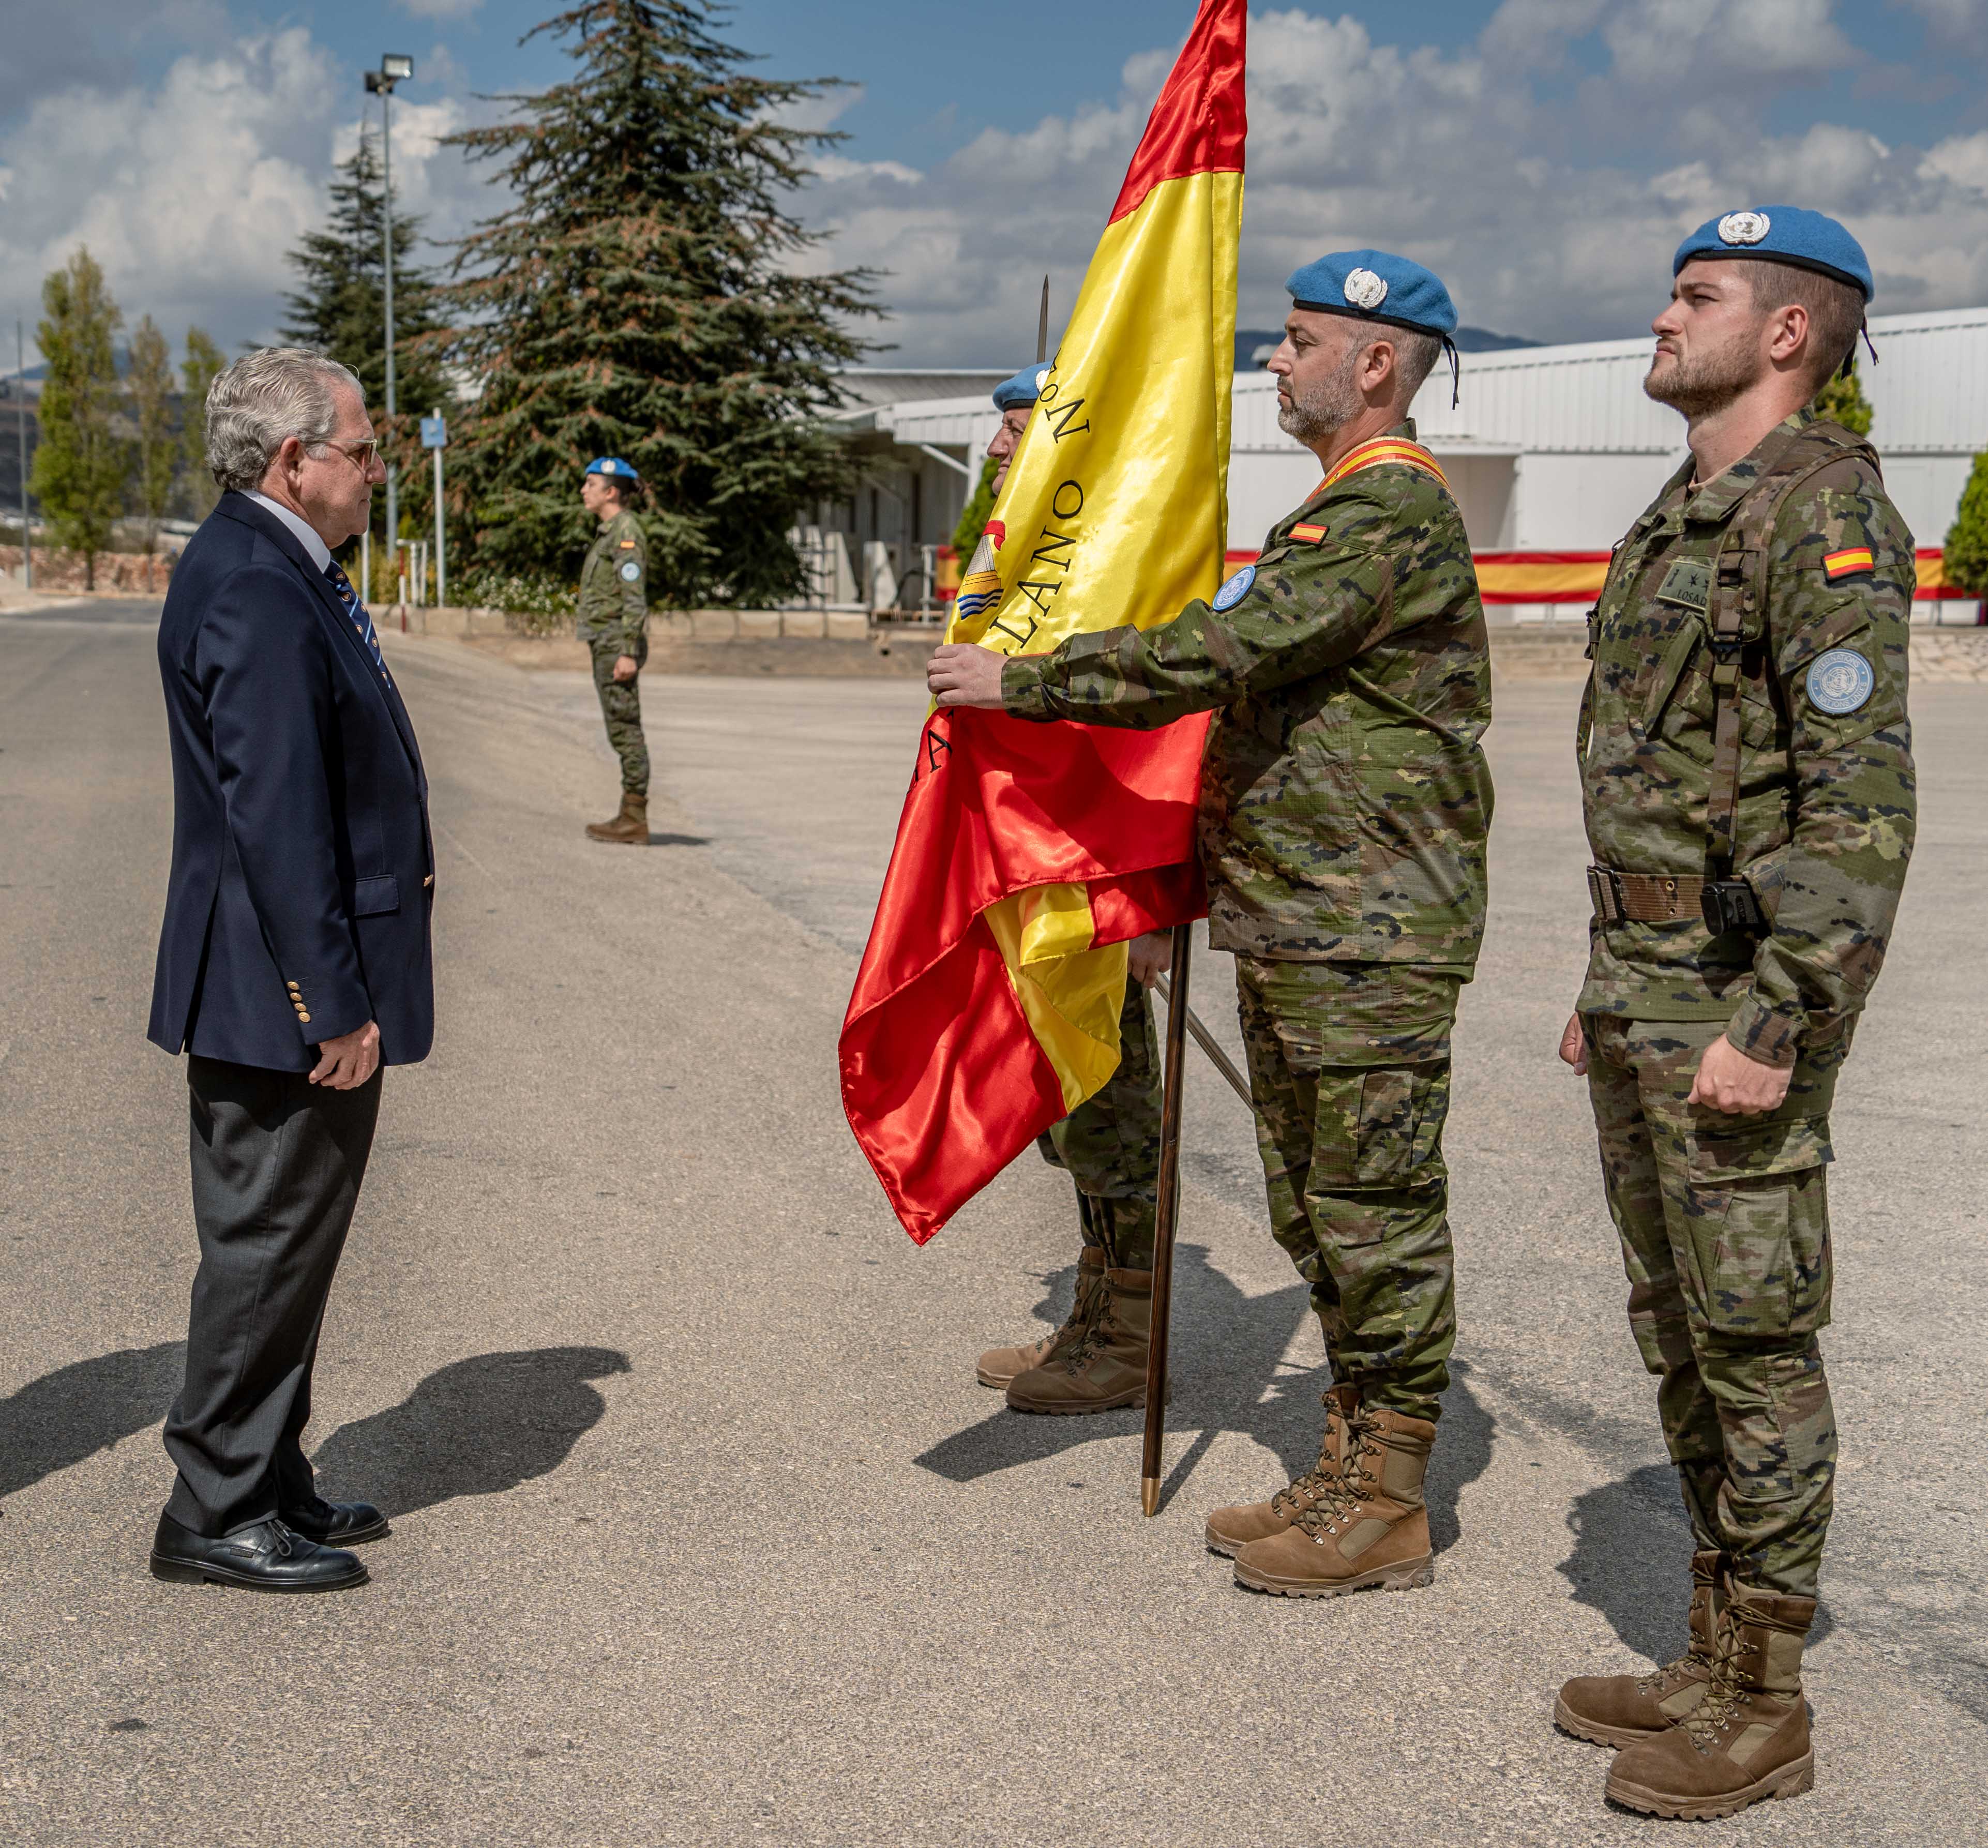 Spanish Ambassador to Lebanon pledging allegiance to the flags